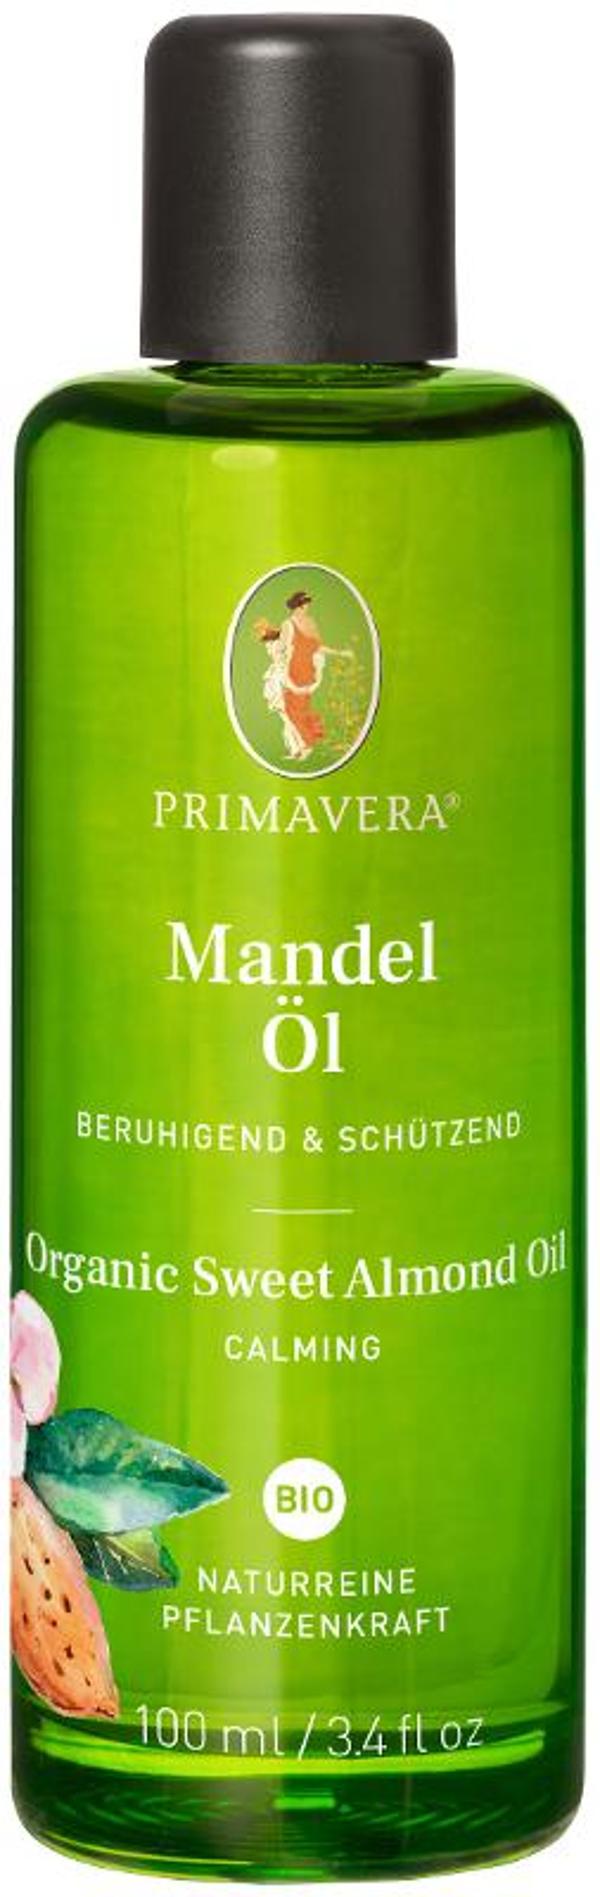 Produktfoto zu Mandel Pflegeöl 100 ml